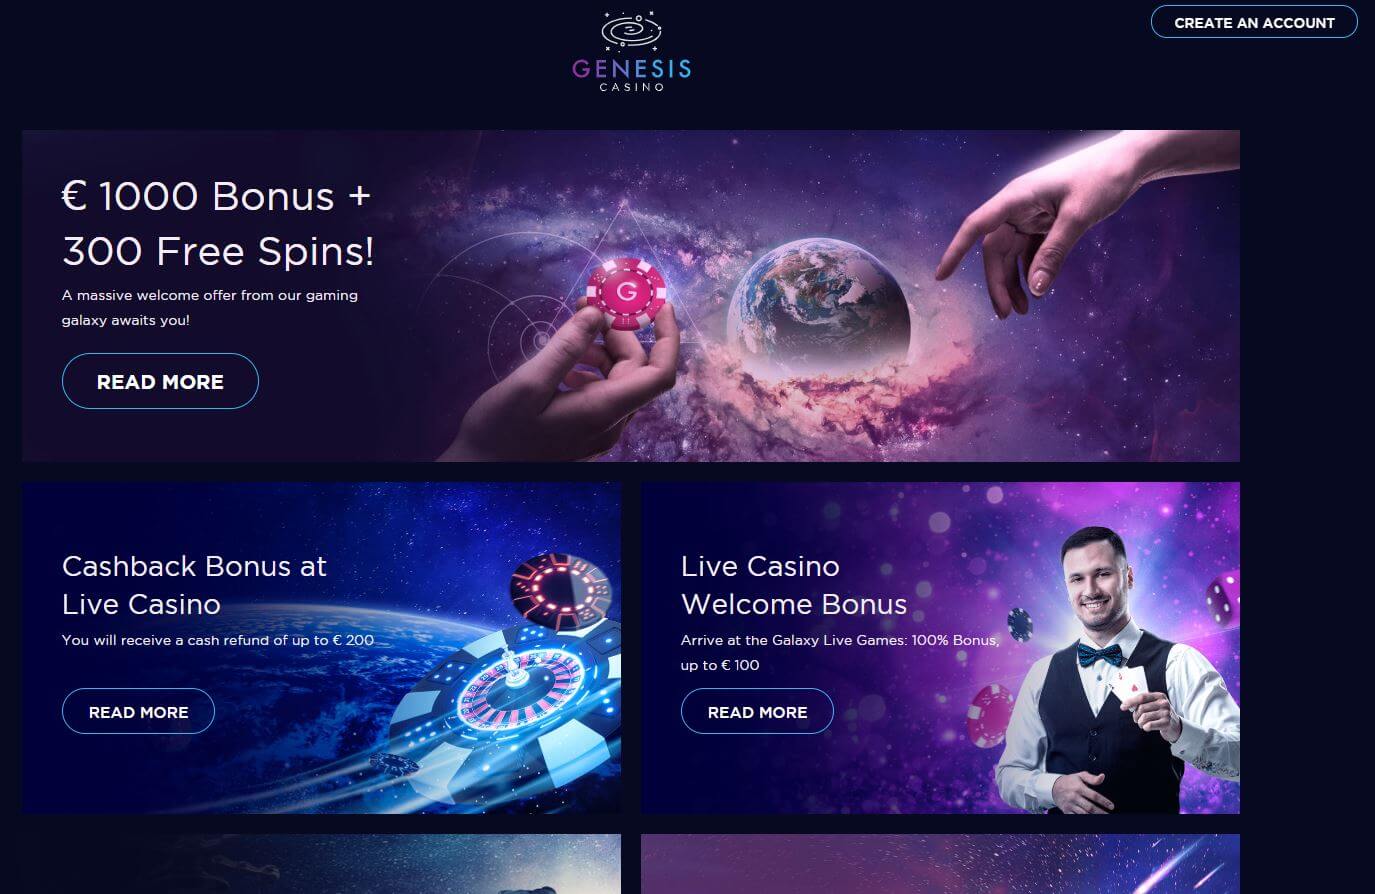 genesis casino review (india) - ₹30,000 welcome bonus - cbl